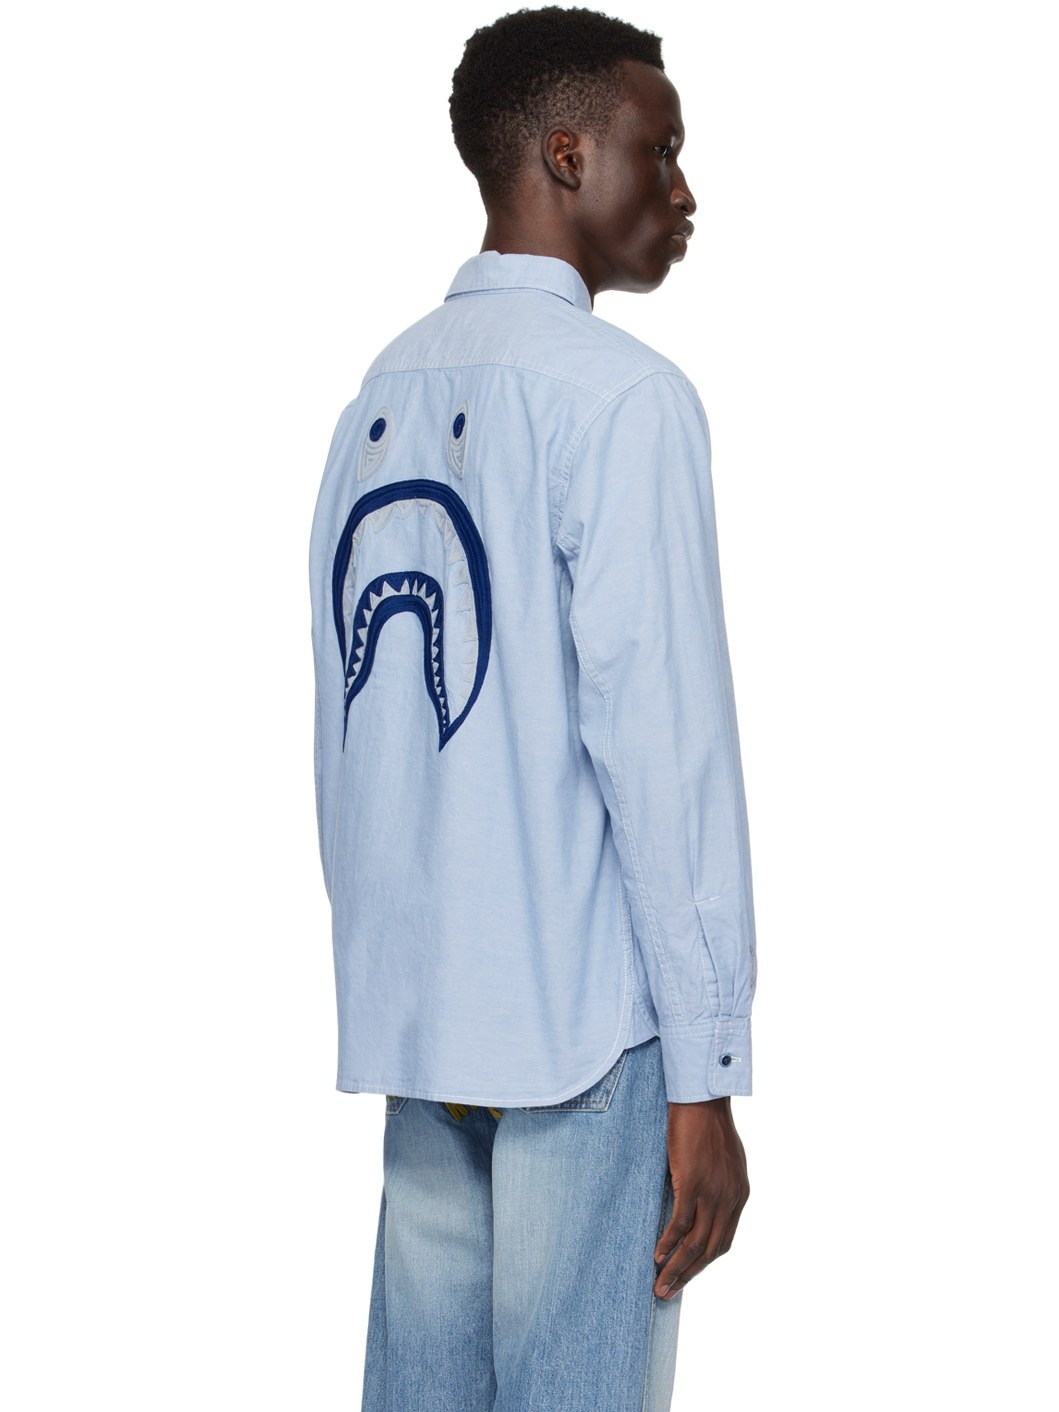 Blue Shark Dungarees Shirt - 3